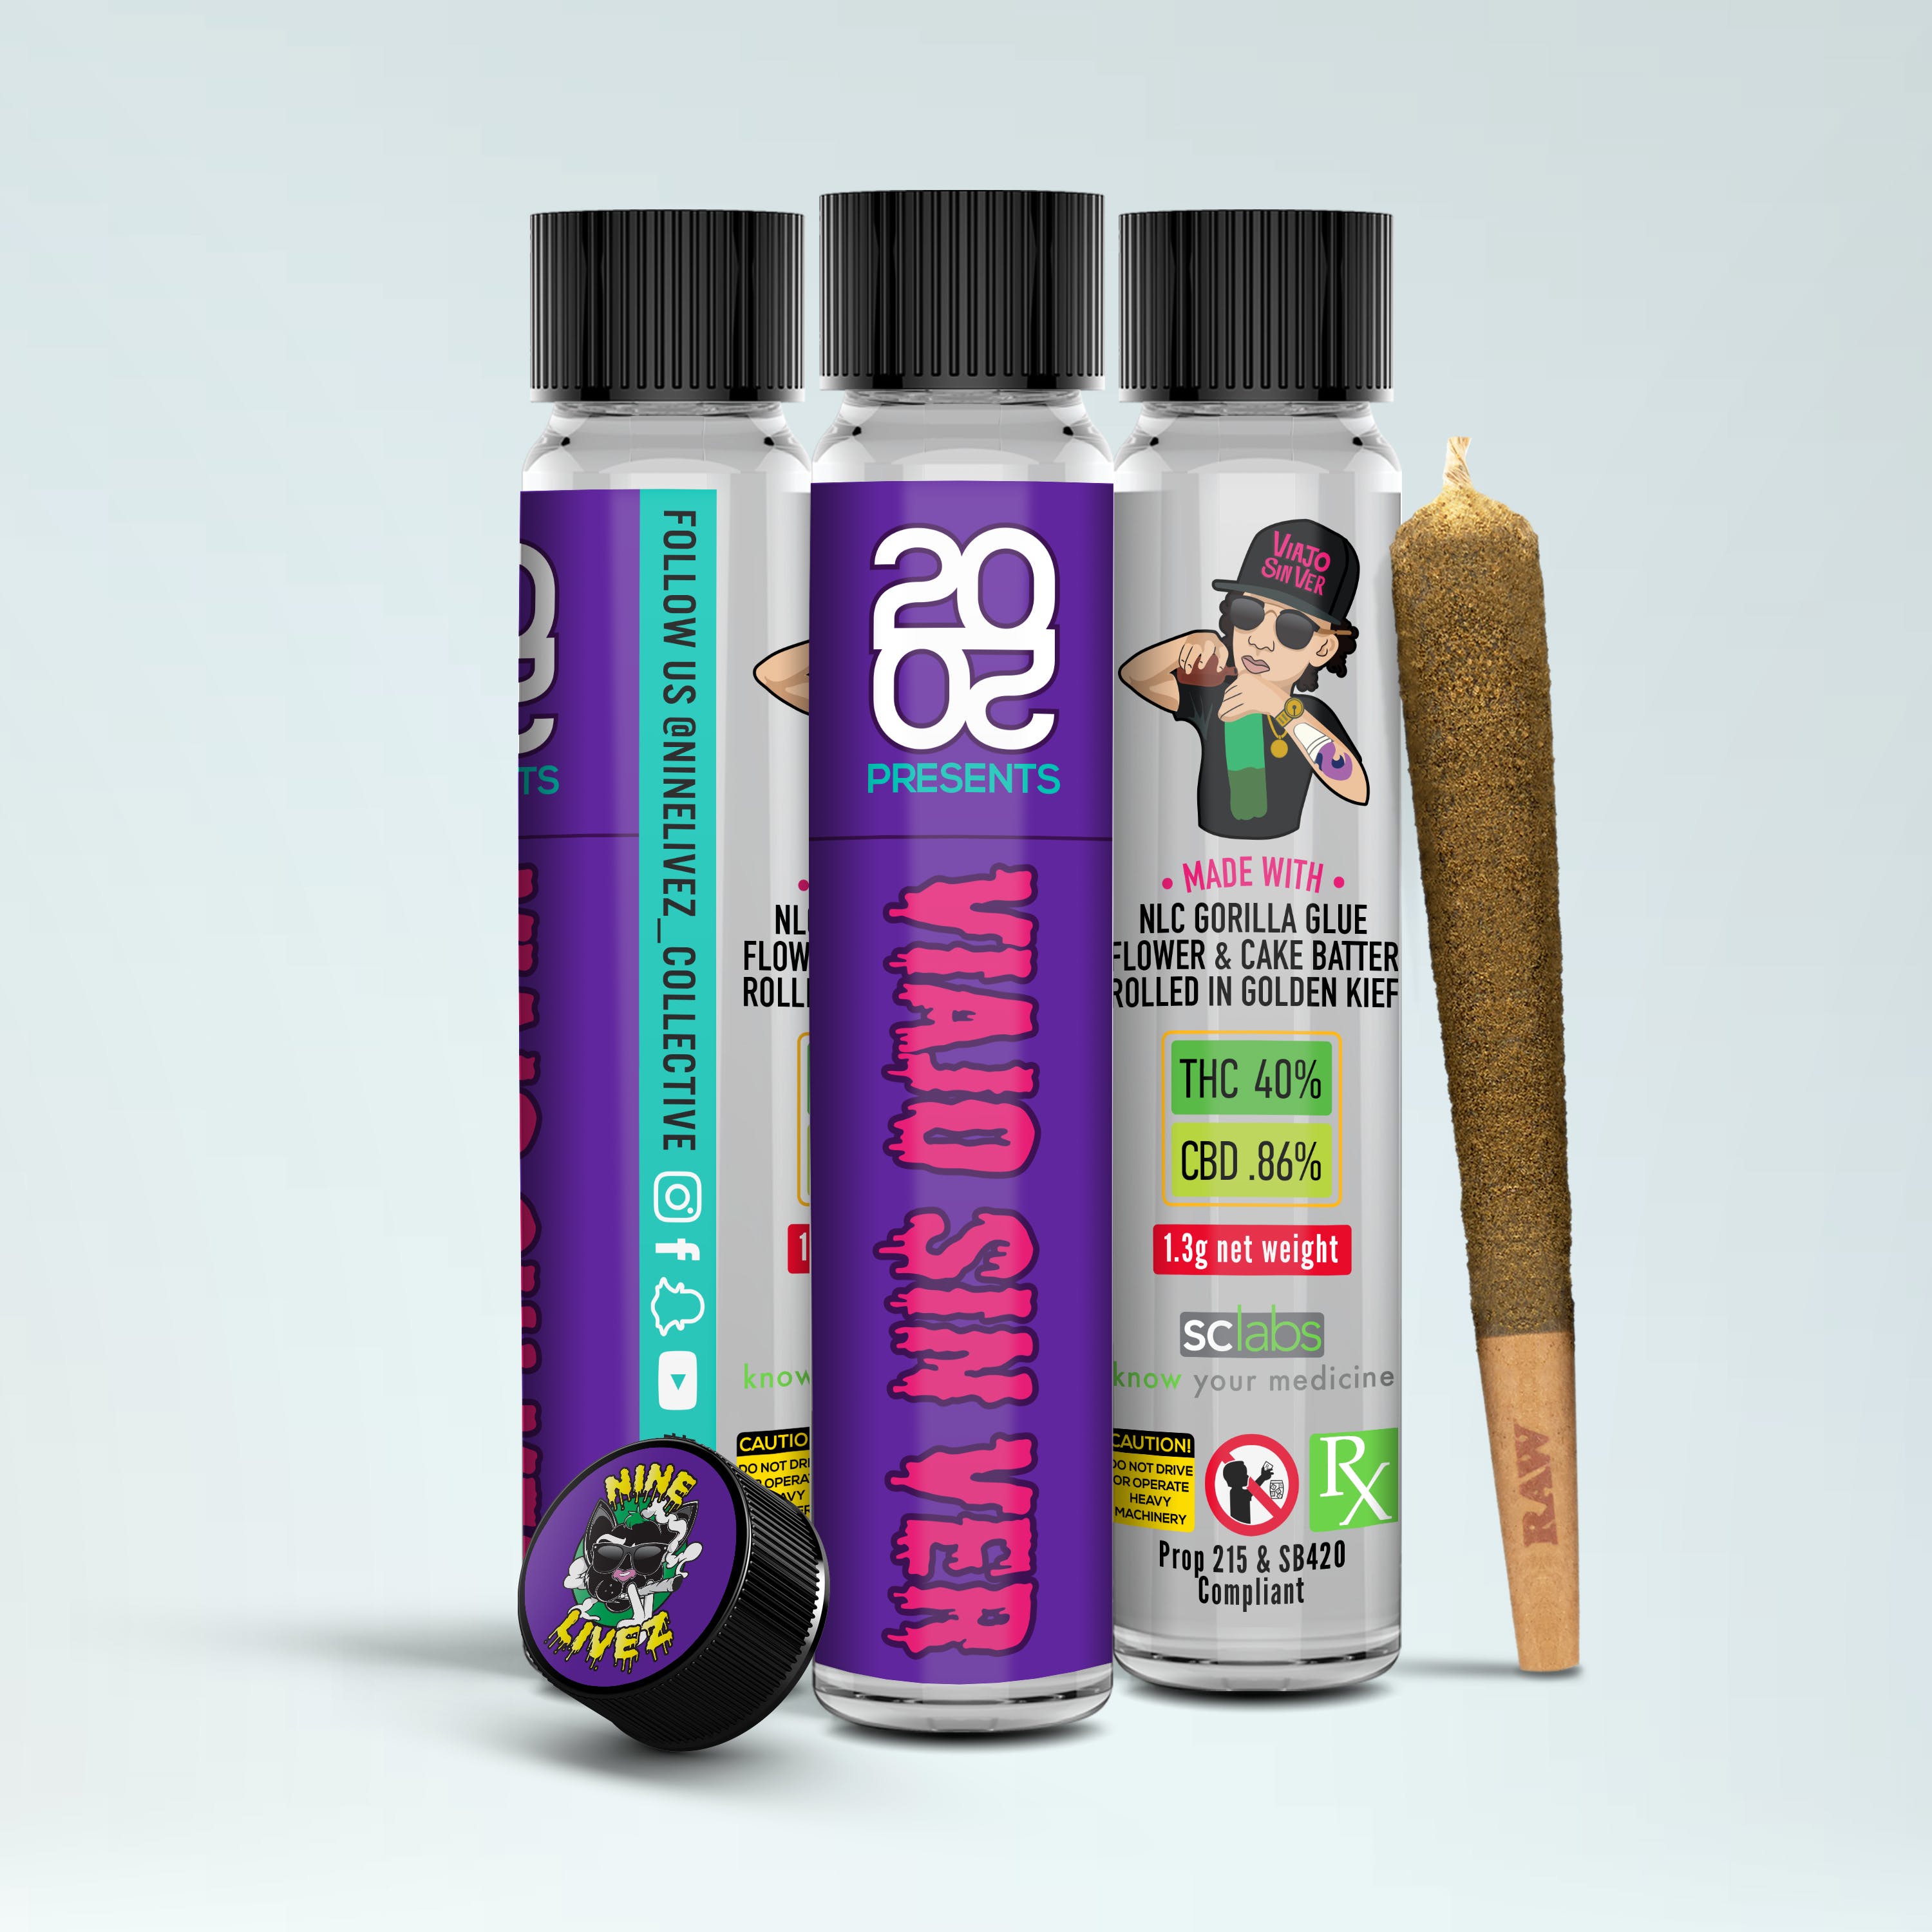 marijuana-dispensaries-supreme-og-in-los-angeles-2020-presents-viajo-sin-ver-original